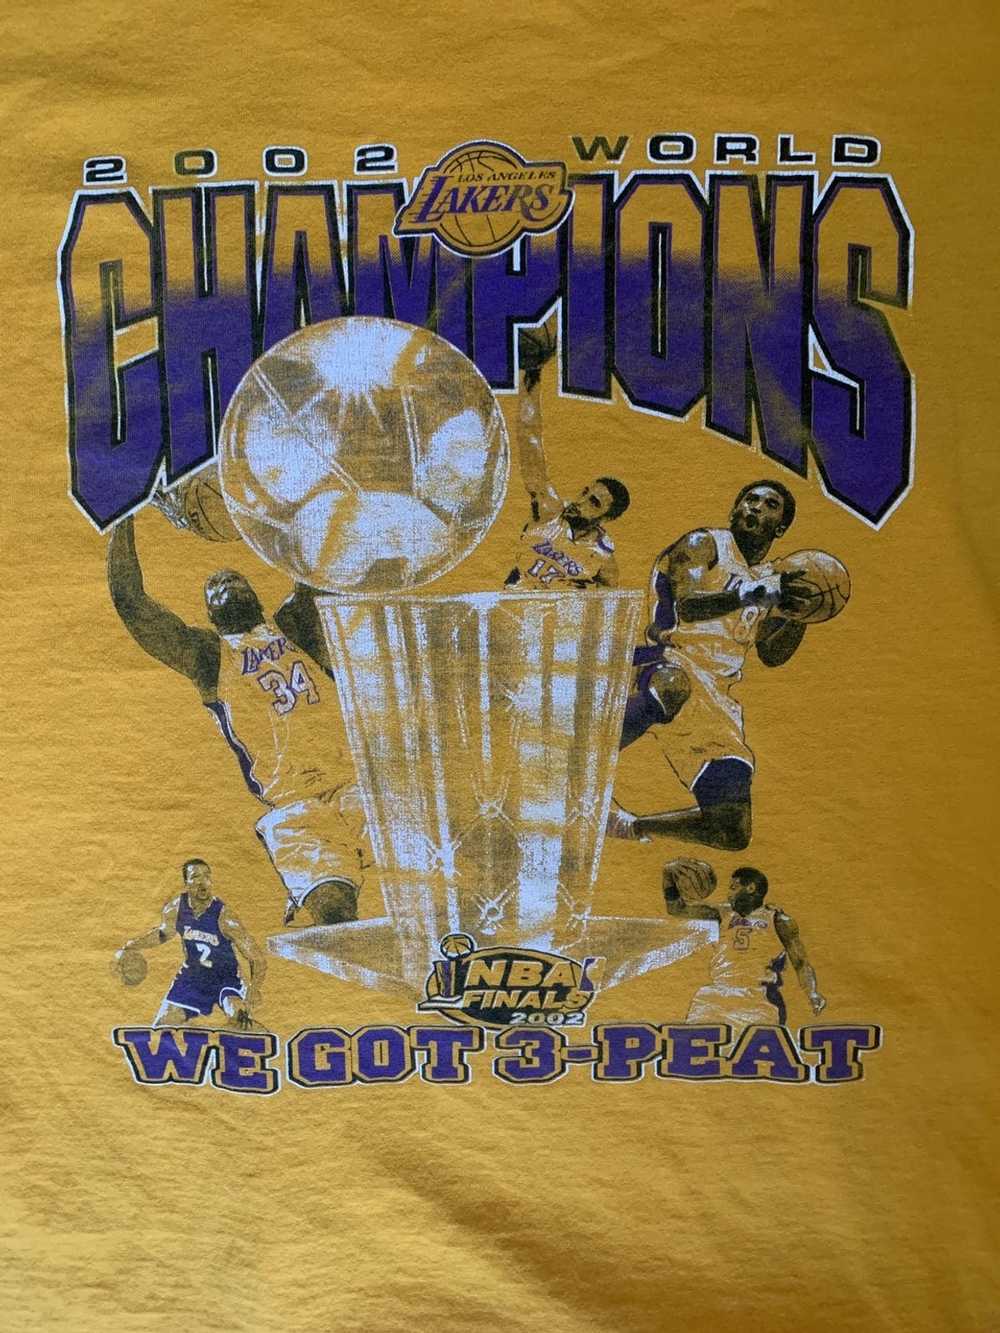 Vintage 2002 Lakers World Champions Shirt - image 2